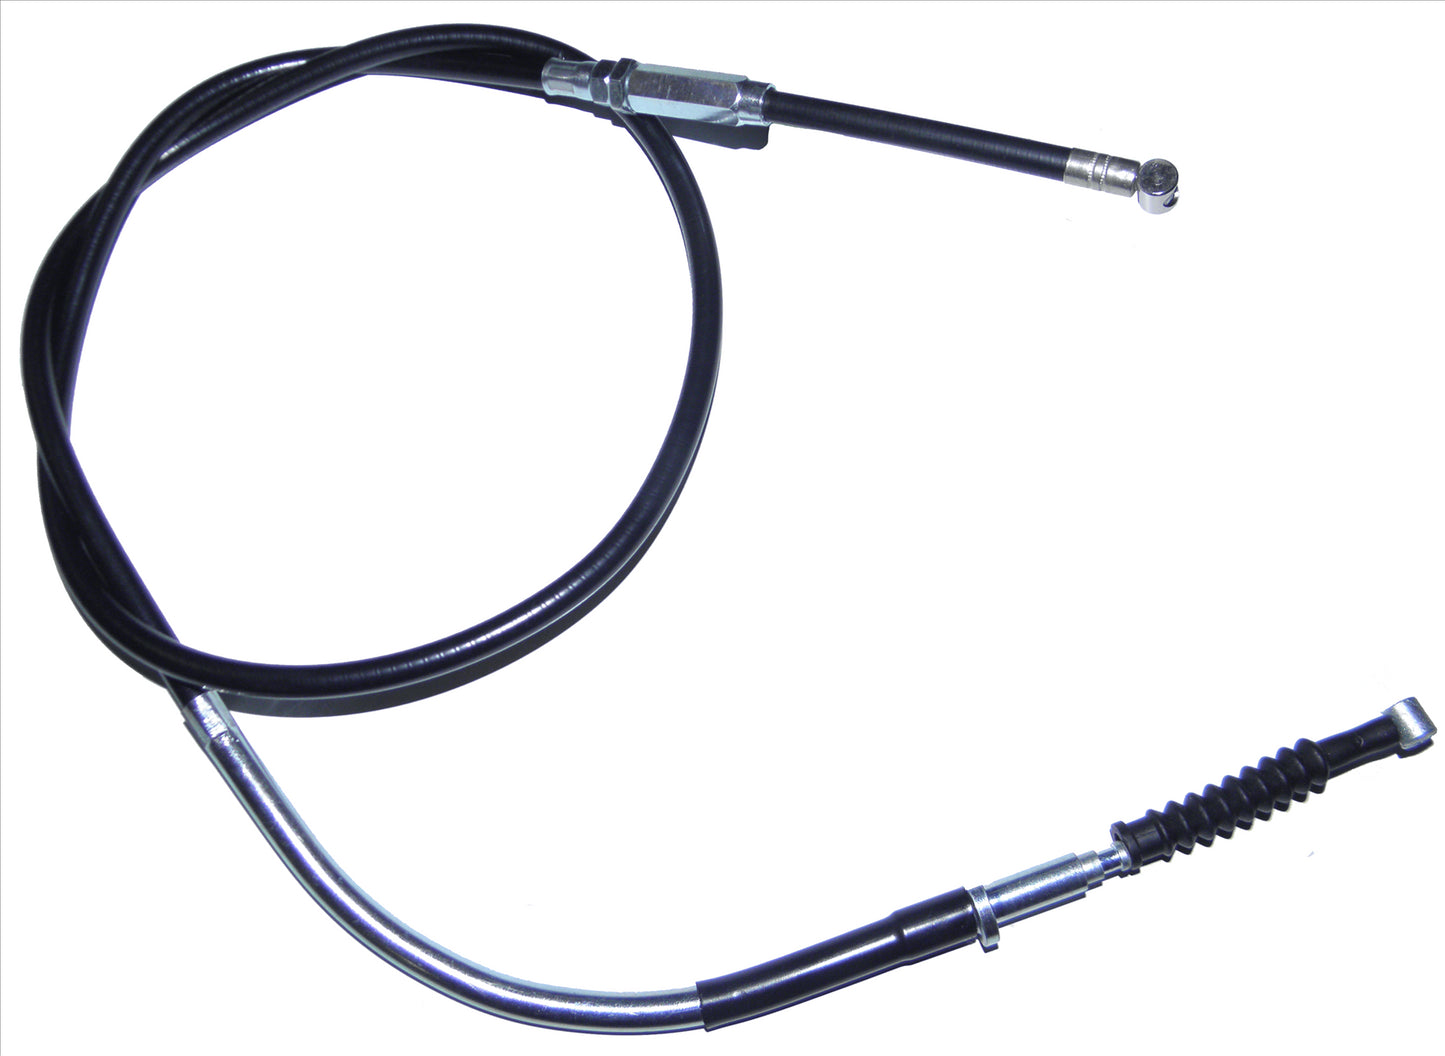 Apico Black Clutch Cable For Kawasaki KX 250 1990-1998